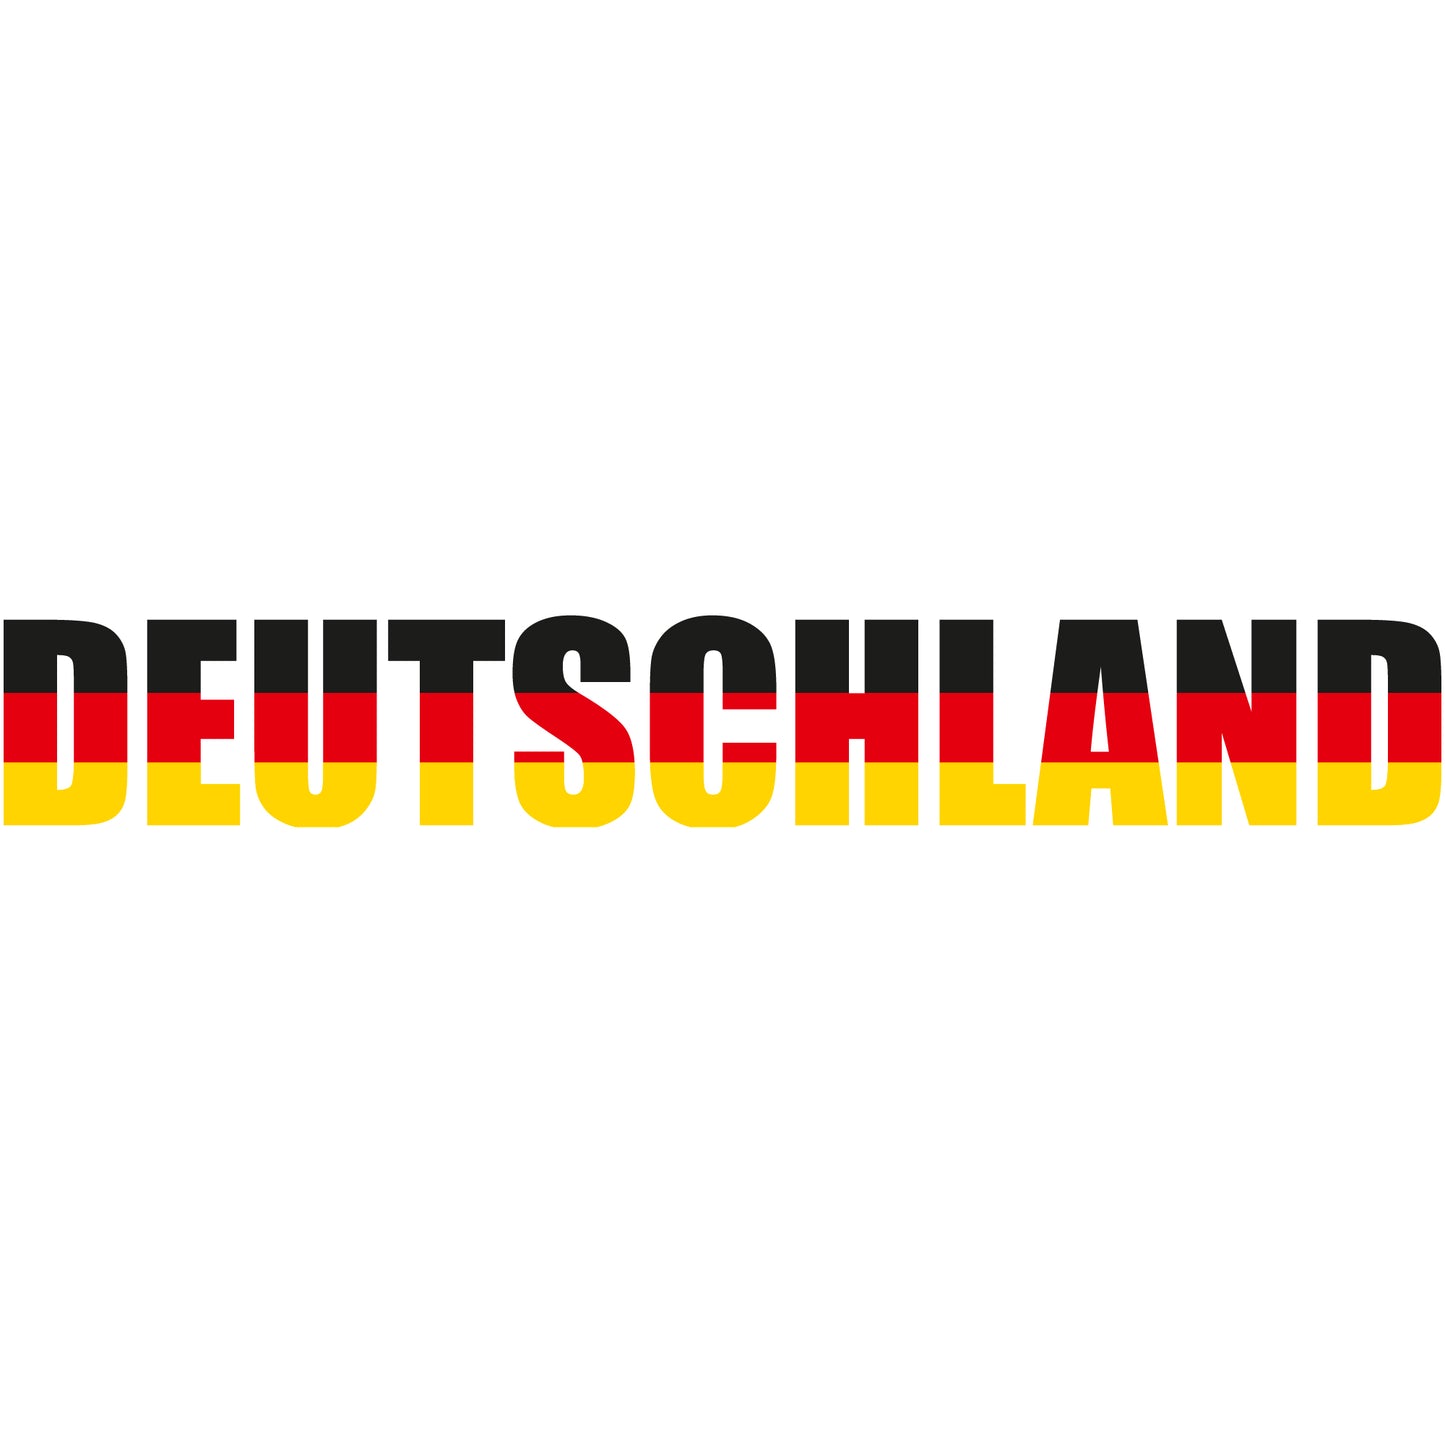 Aufkleber - Autoaufkleber - Deutschland - Schriftzug - Heckscheibenaufkleber